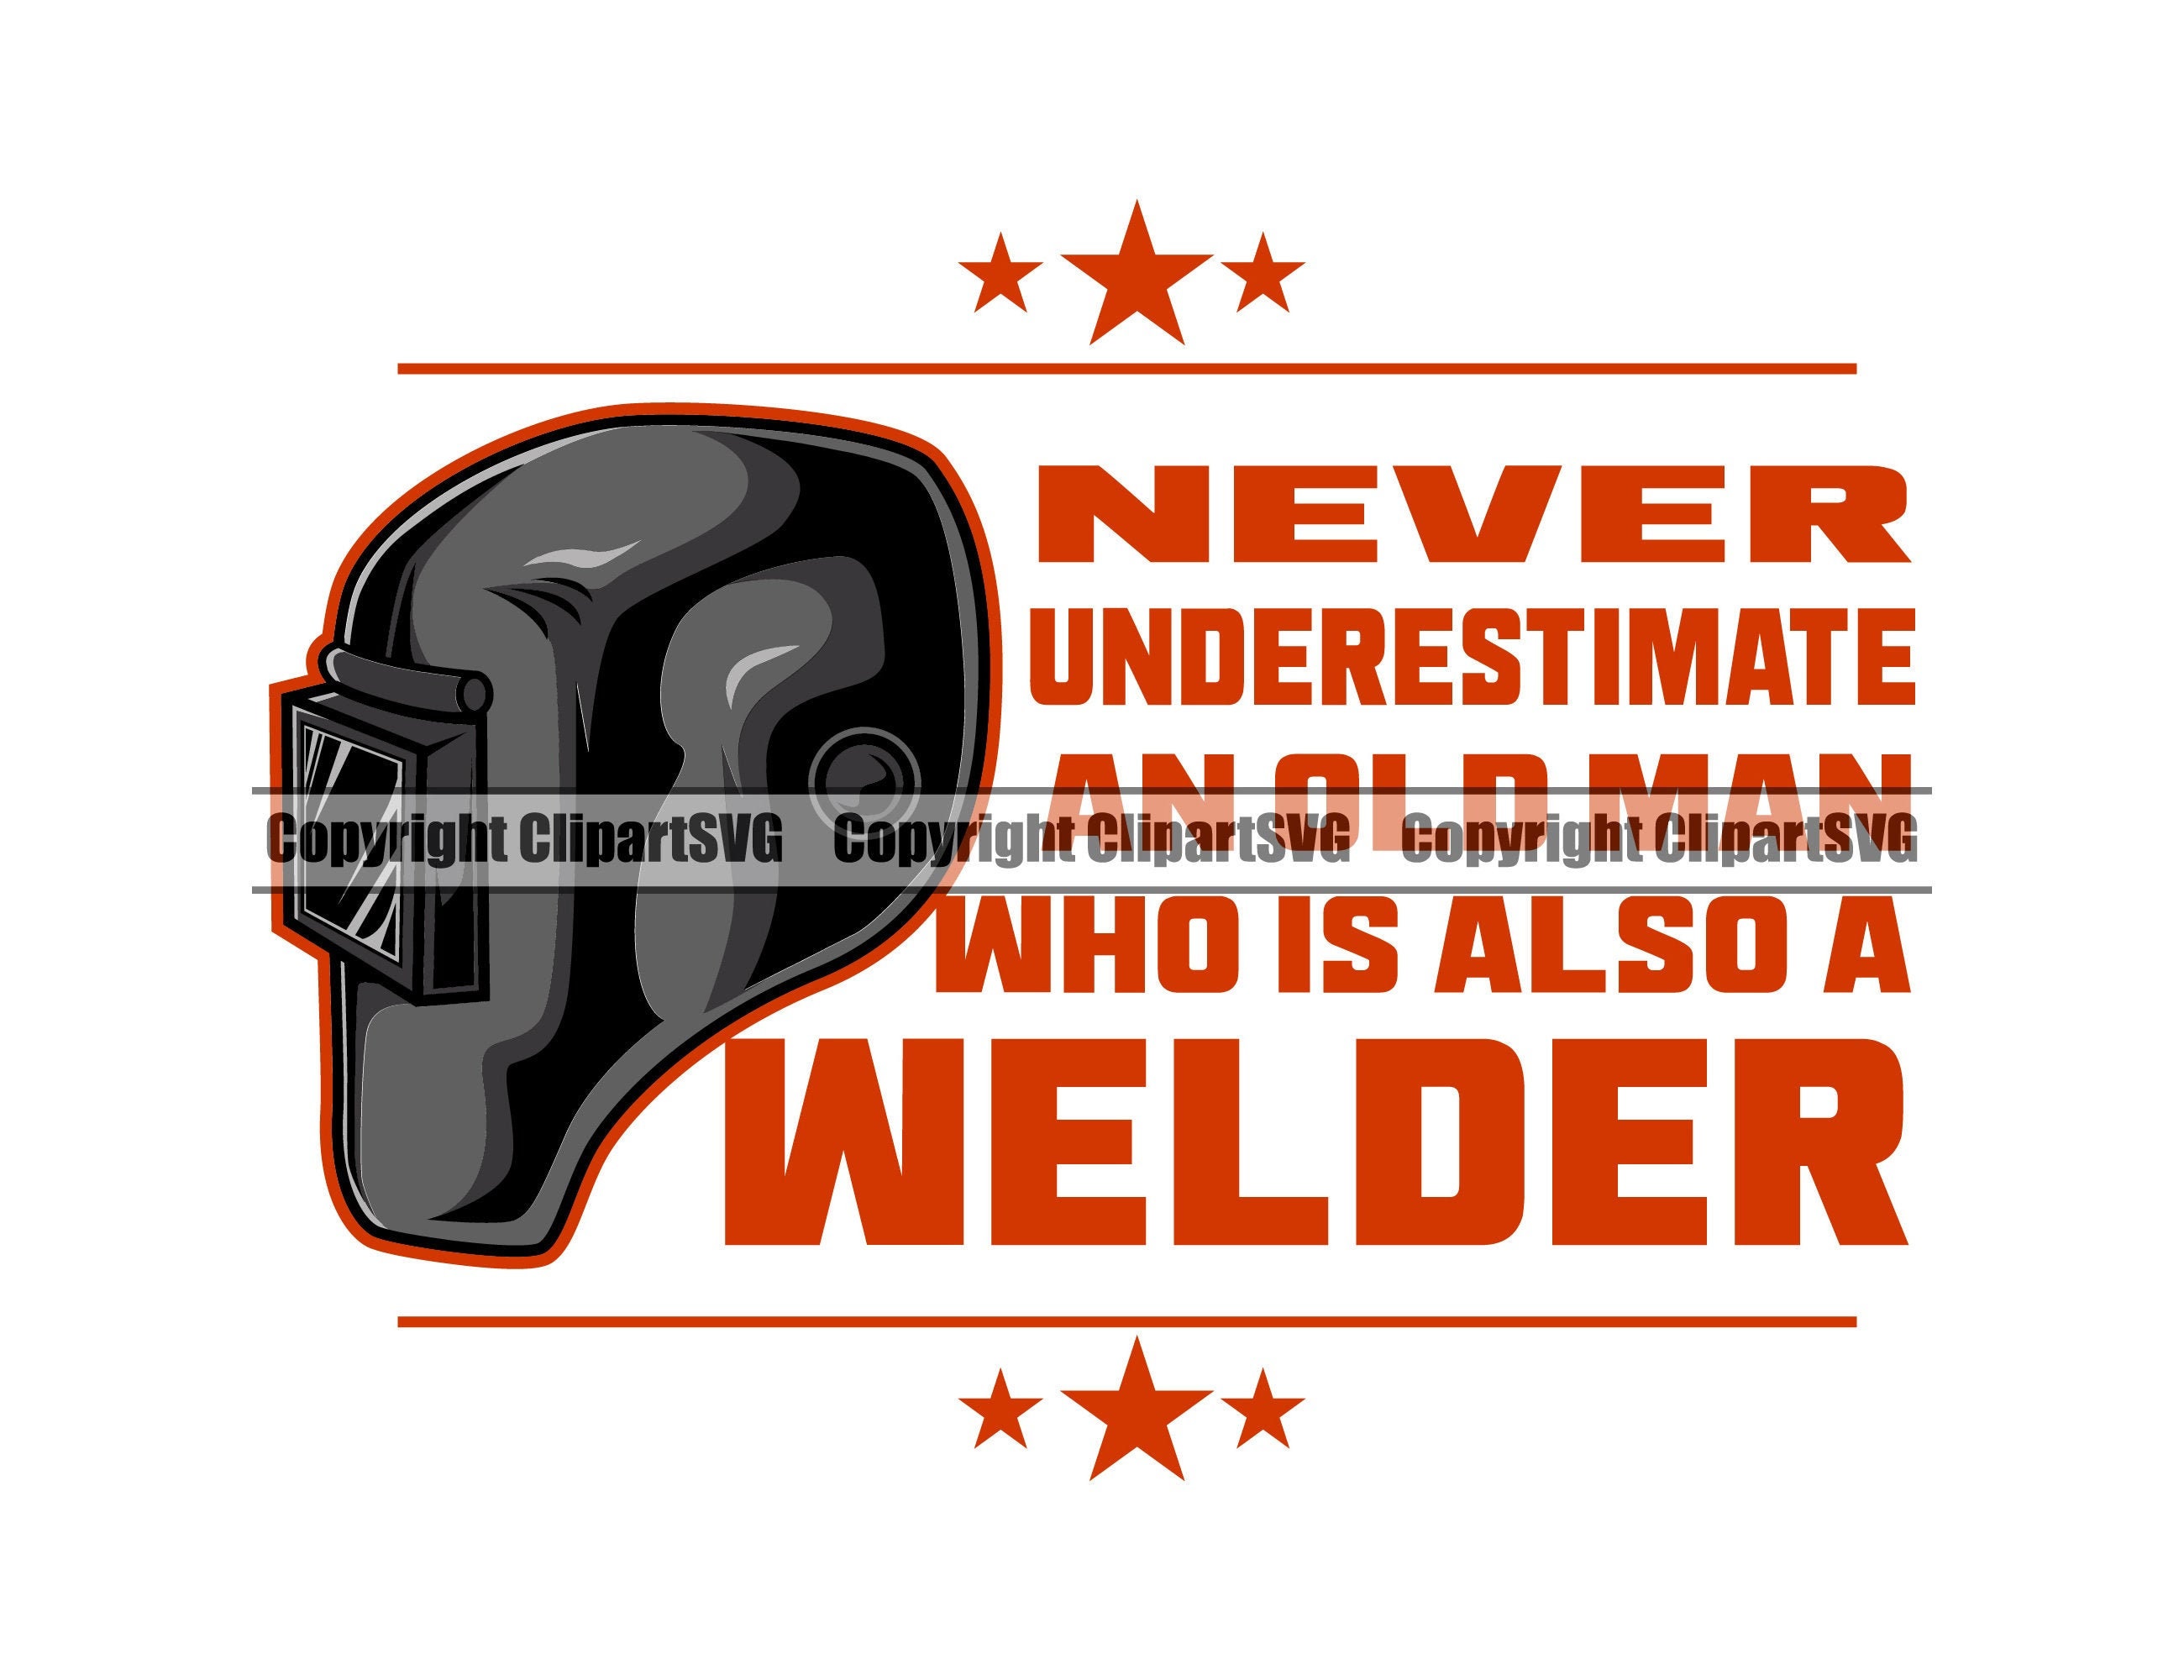 Welder never underestimate for sale  